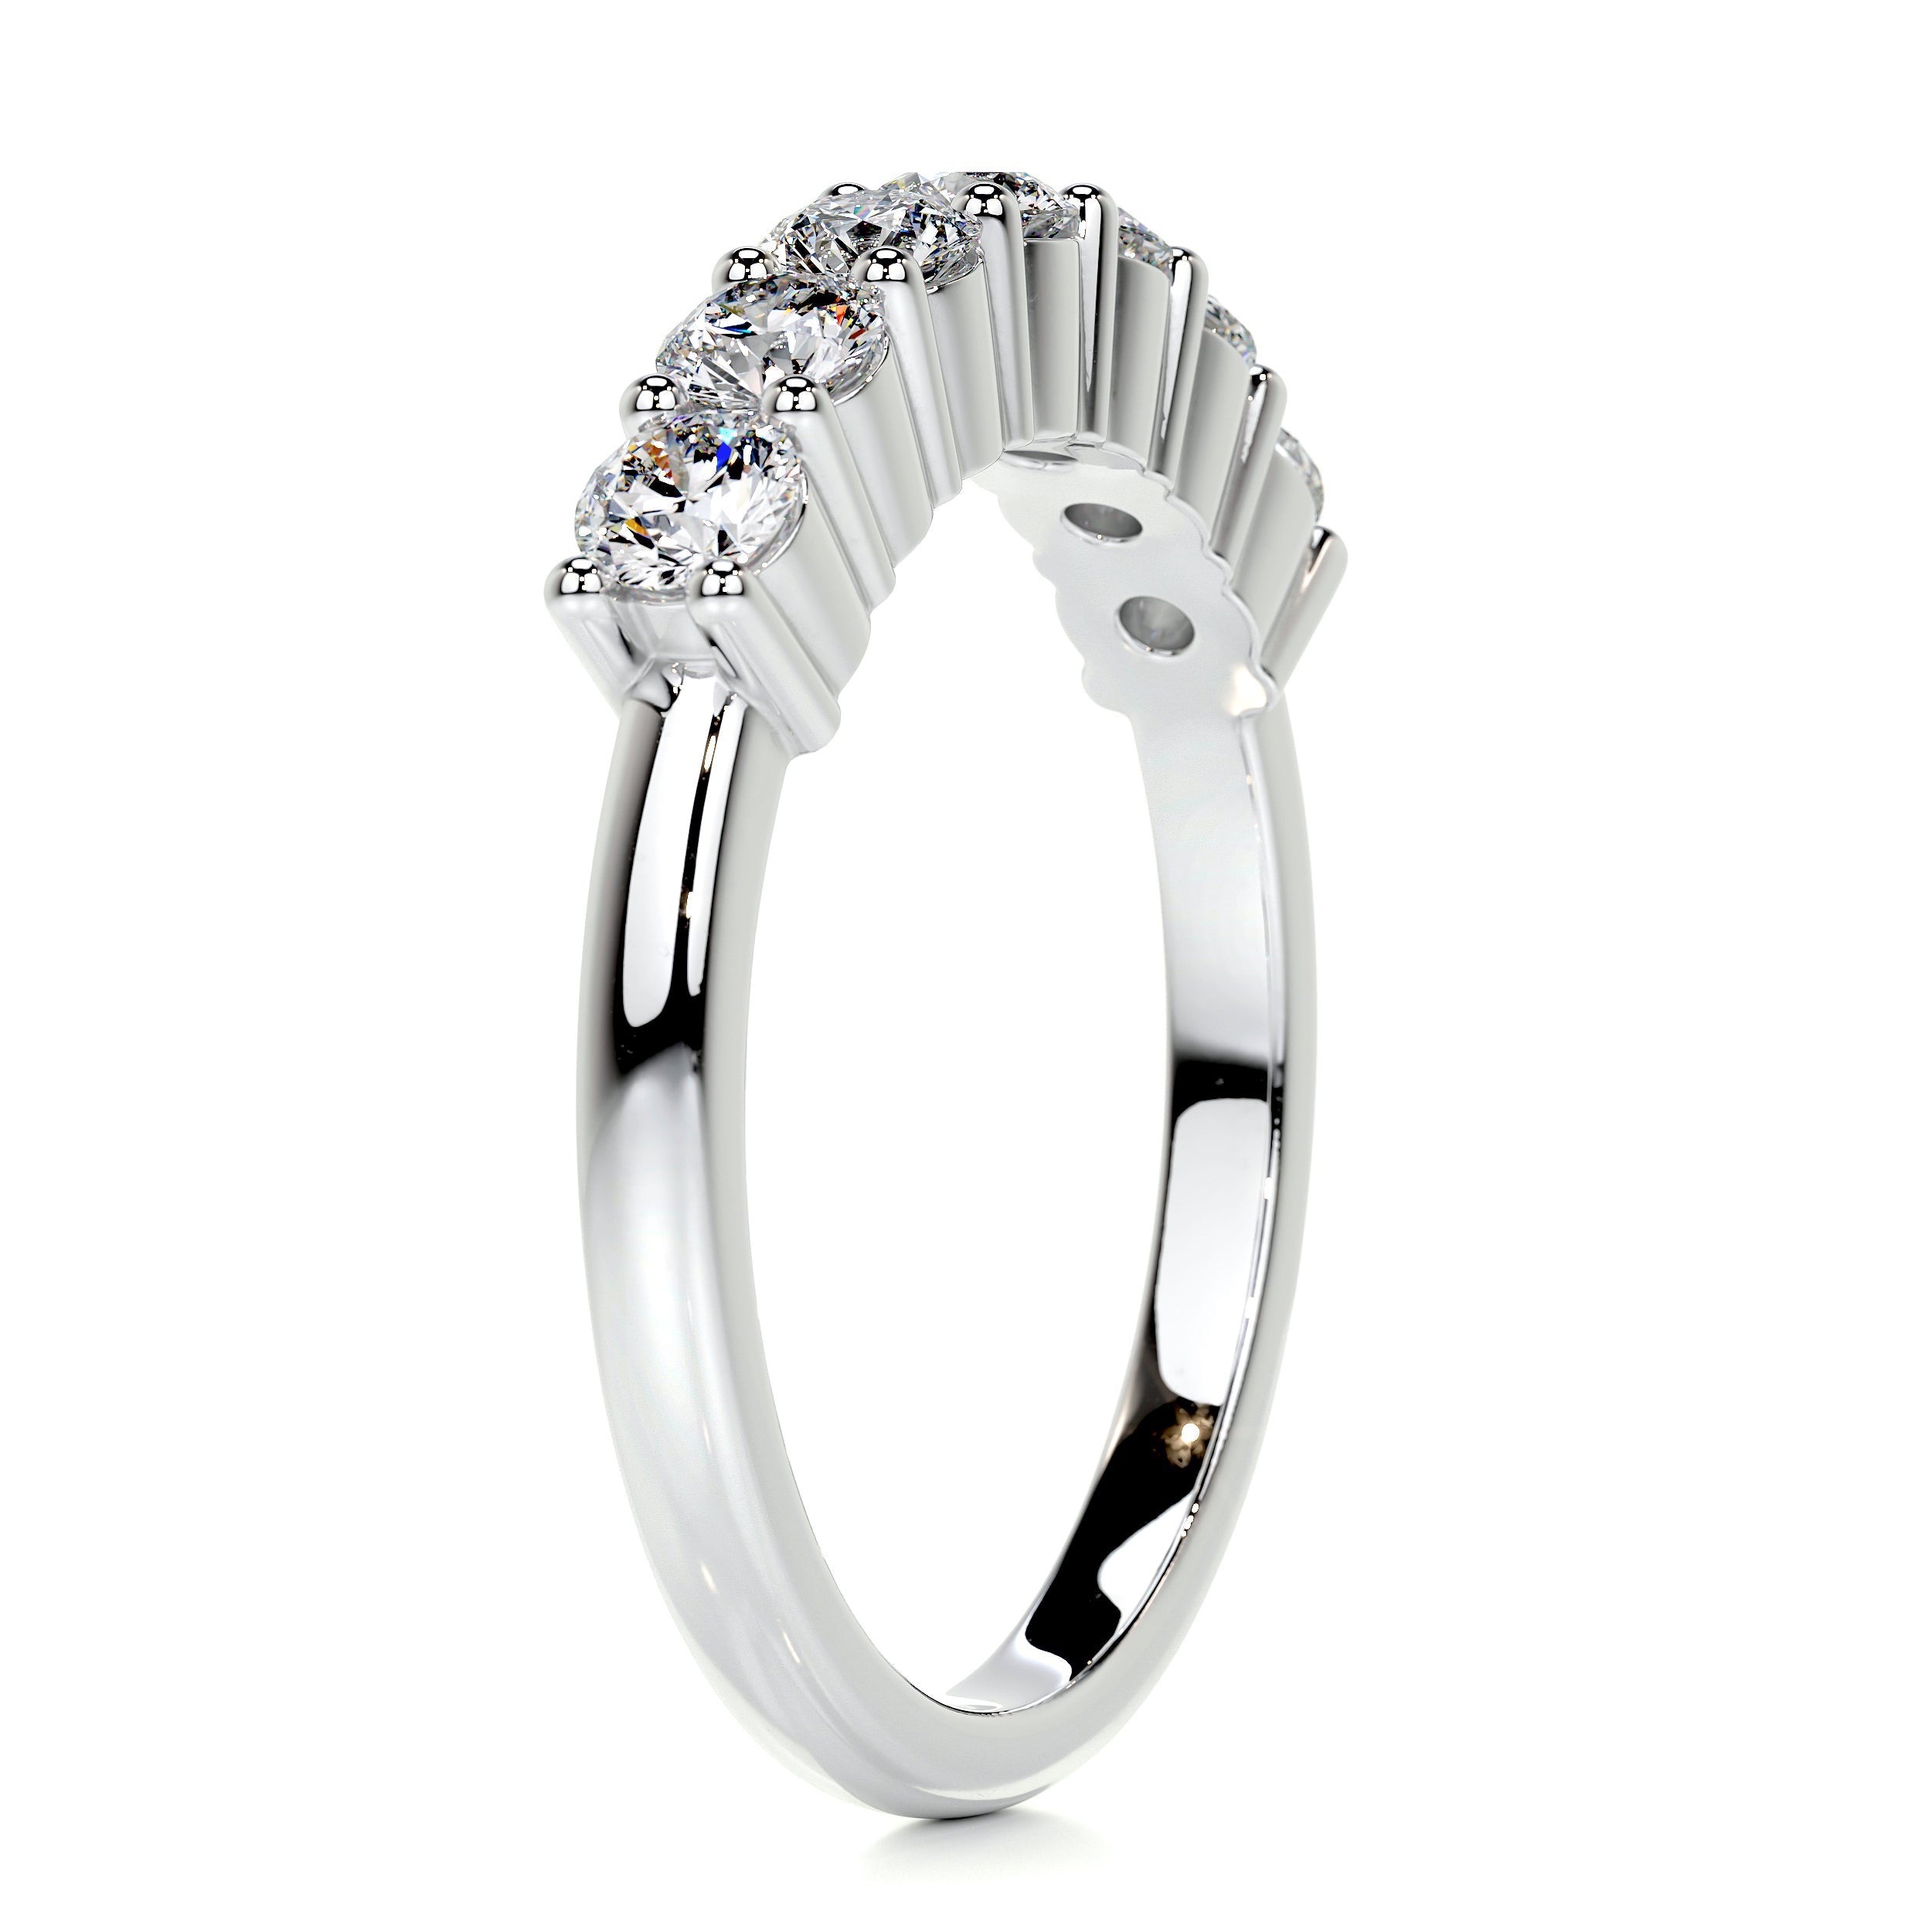 Catherine Diamond Wedding Ring   (0.75 Carat) -18K White Gold (RTS)